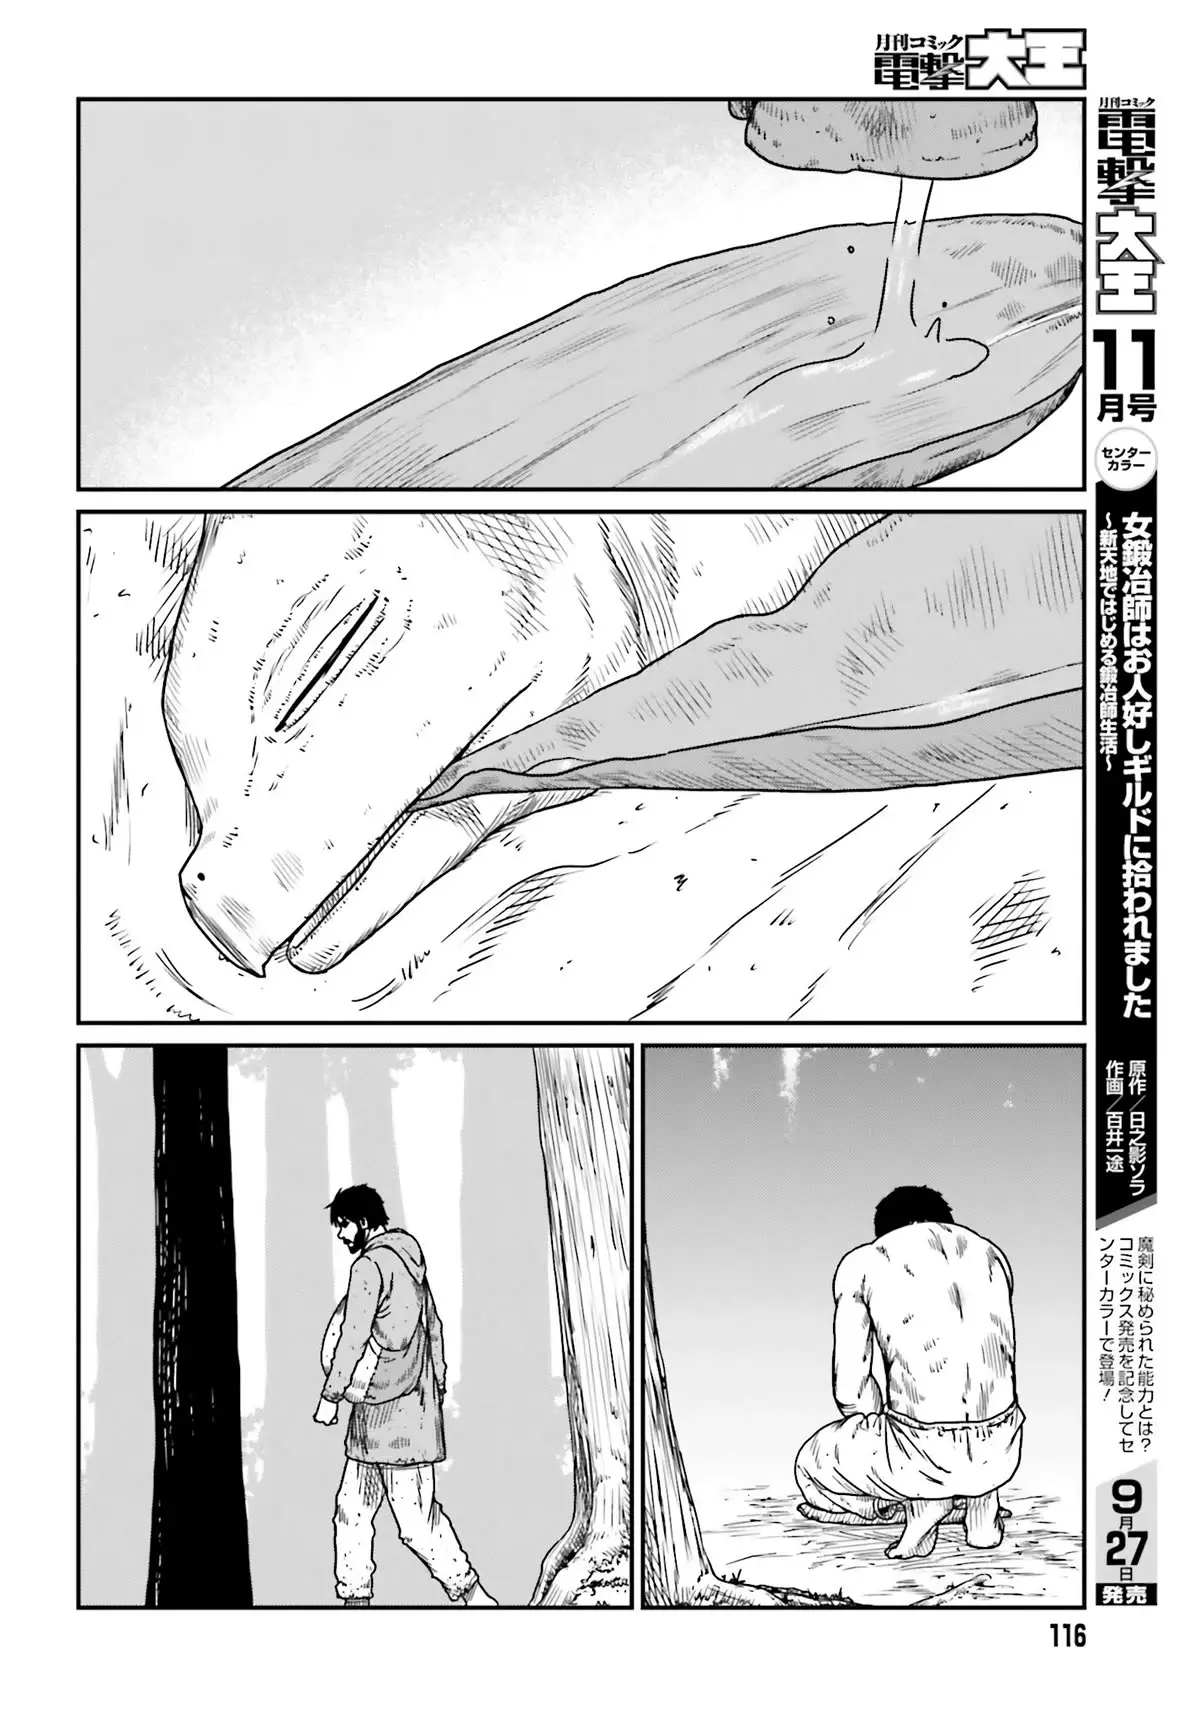 Yajin Tensei: Karate Survivor In Another World - 43 page 14-641b1194